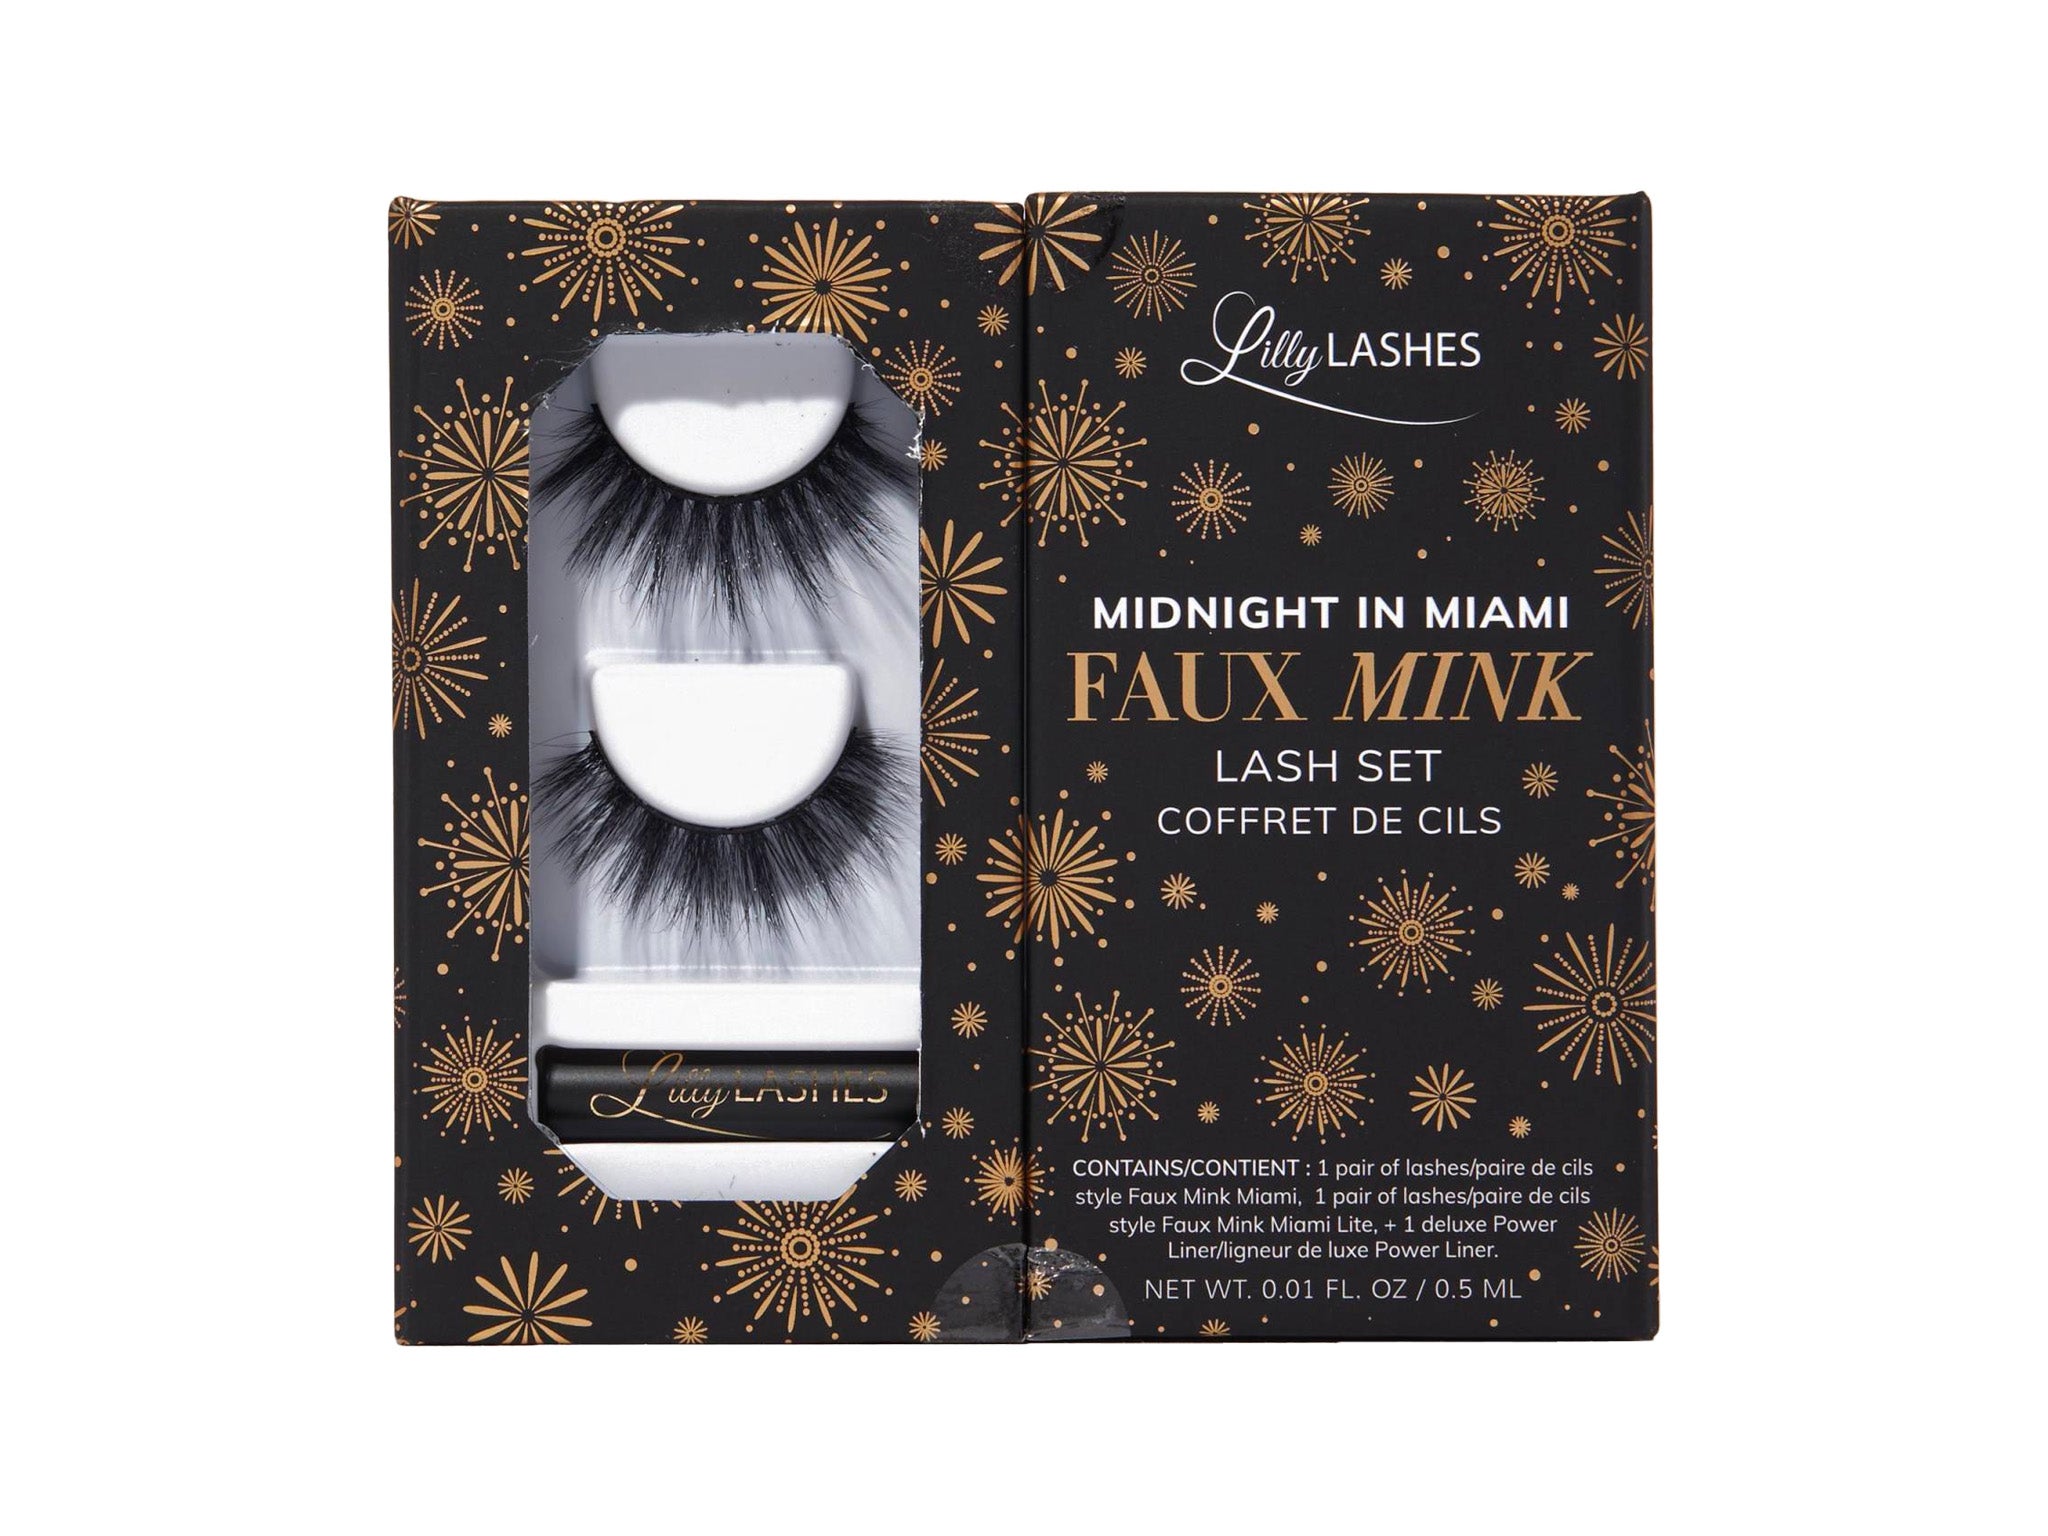  Lily Lashes midnight in Miami faux mink lash set .jpg